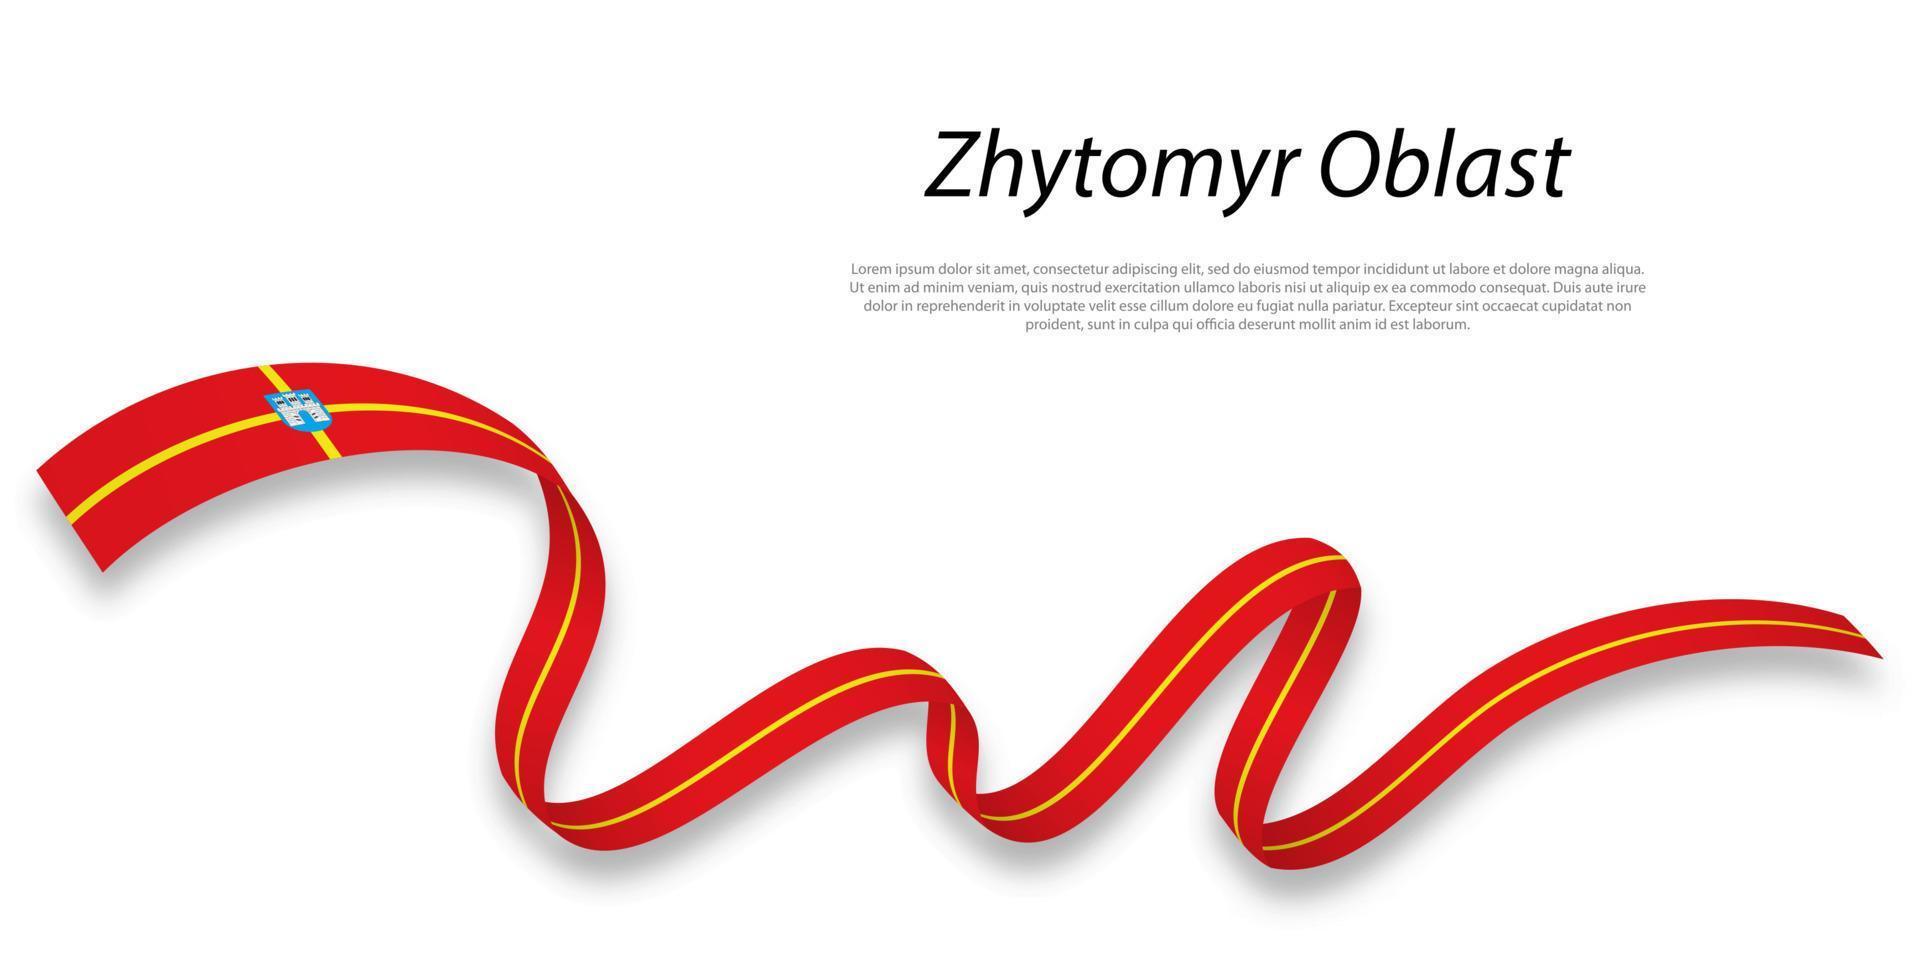 ondulación cinta o raya con bandera de zhytomyr oblast vector